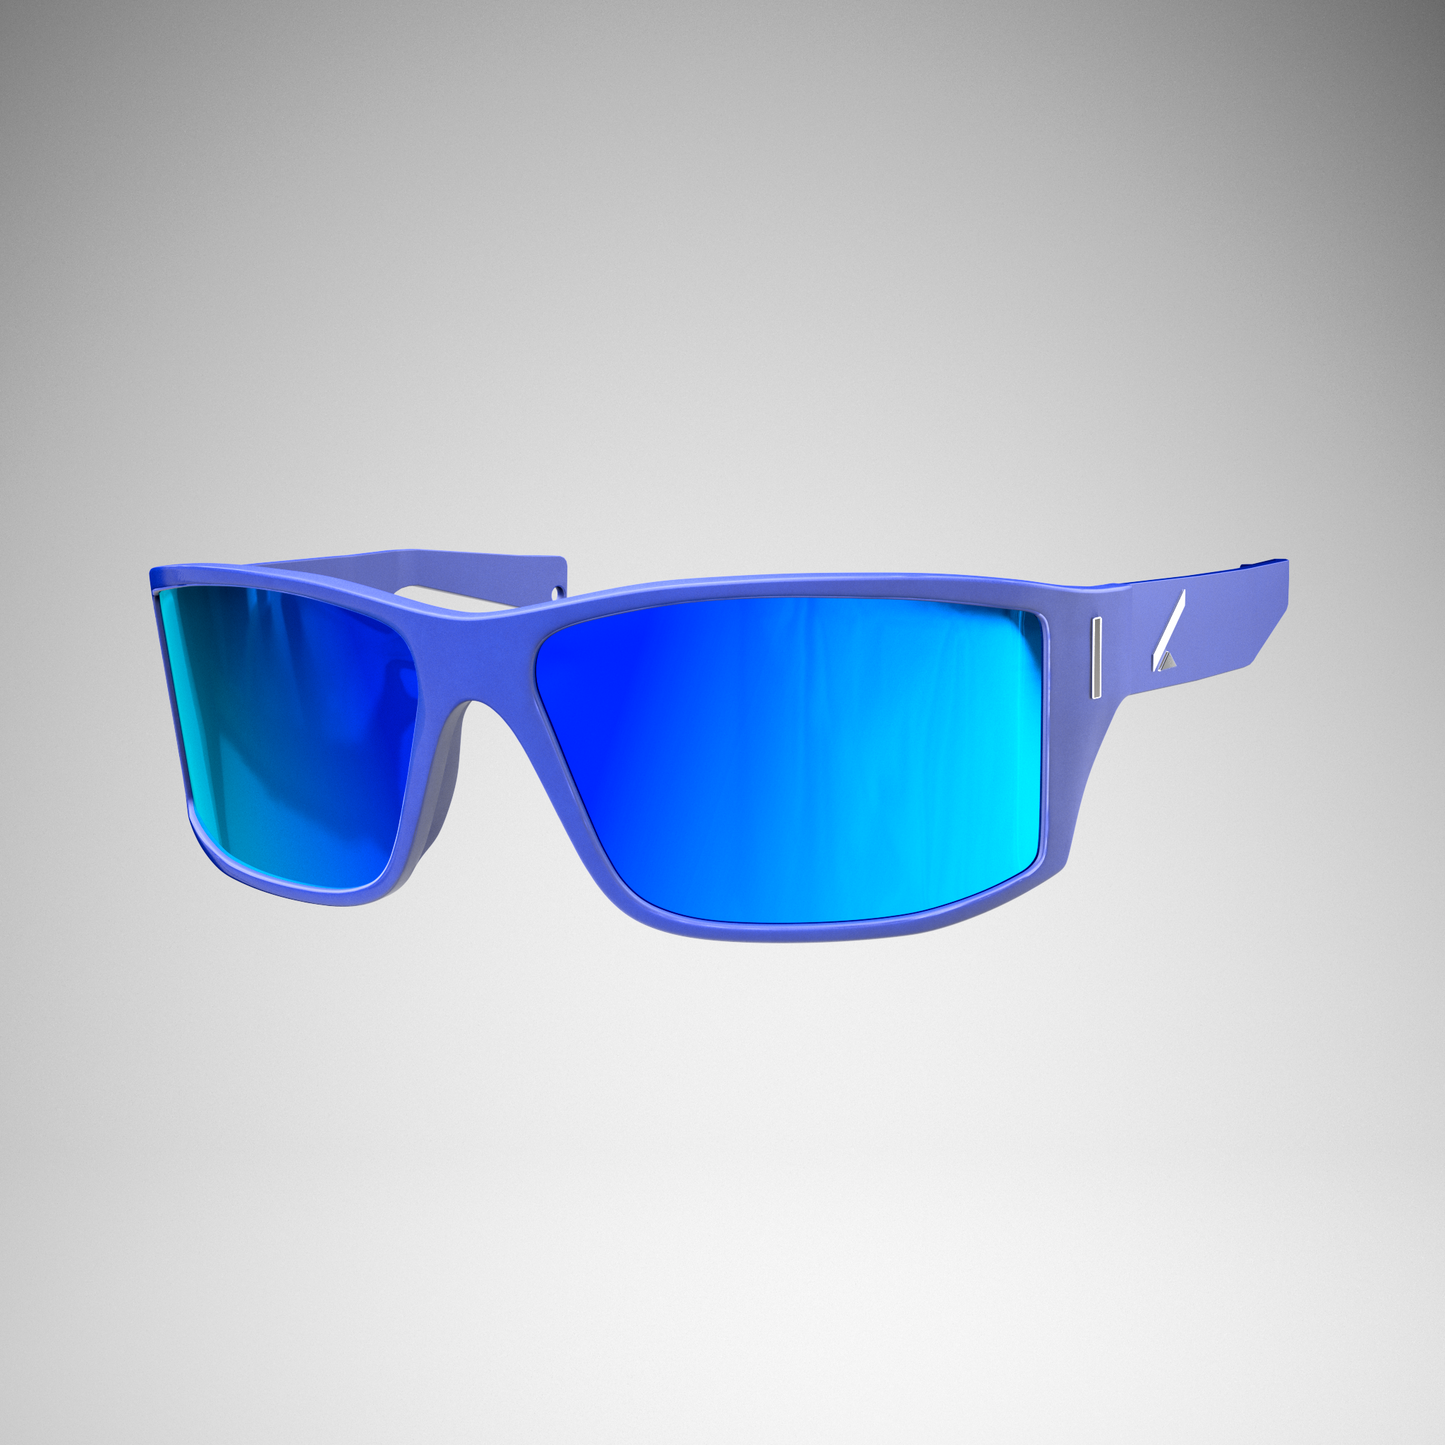 LEVAR Optical Sunglasses